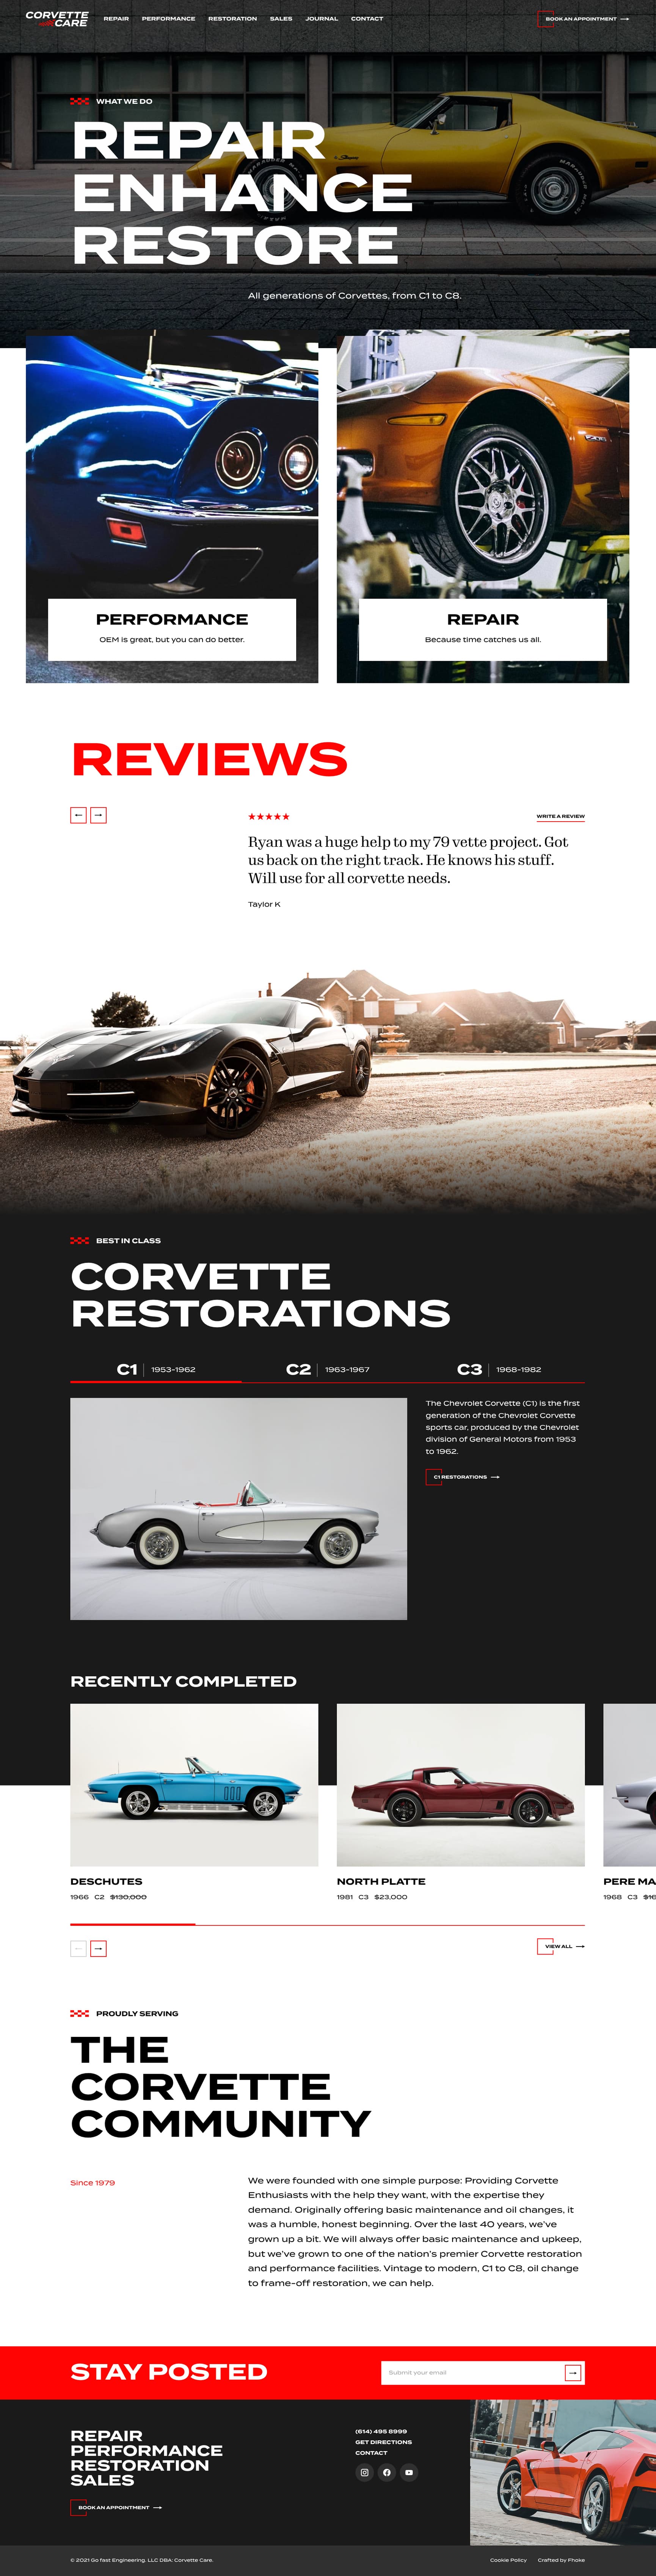 Corvette Care Website Design by London WordPress agency Fhoke